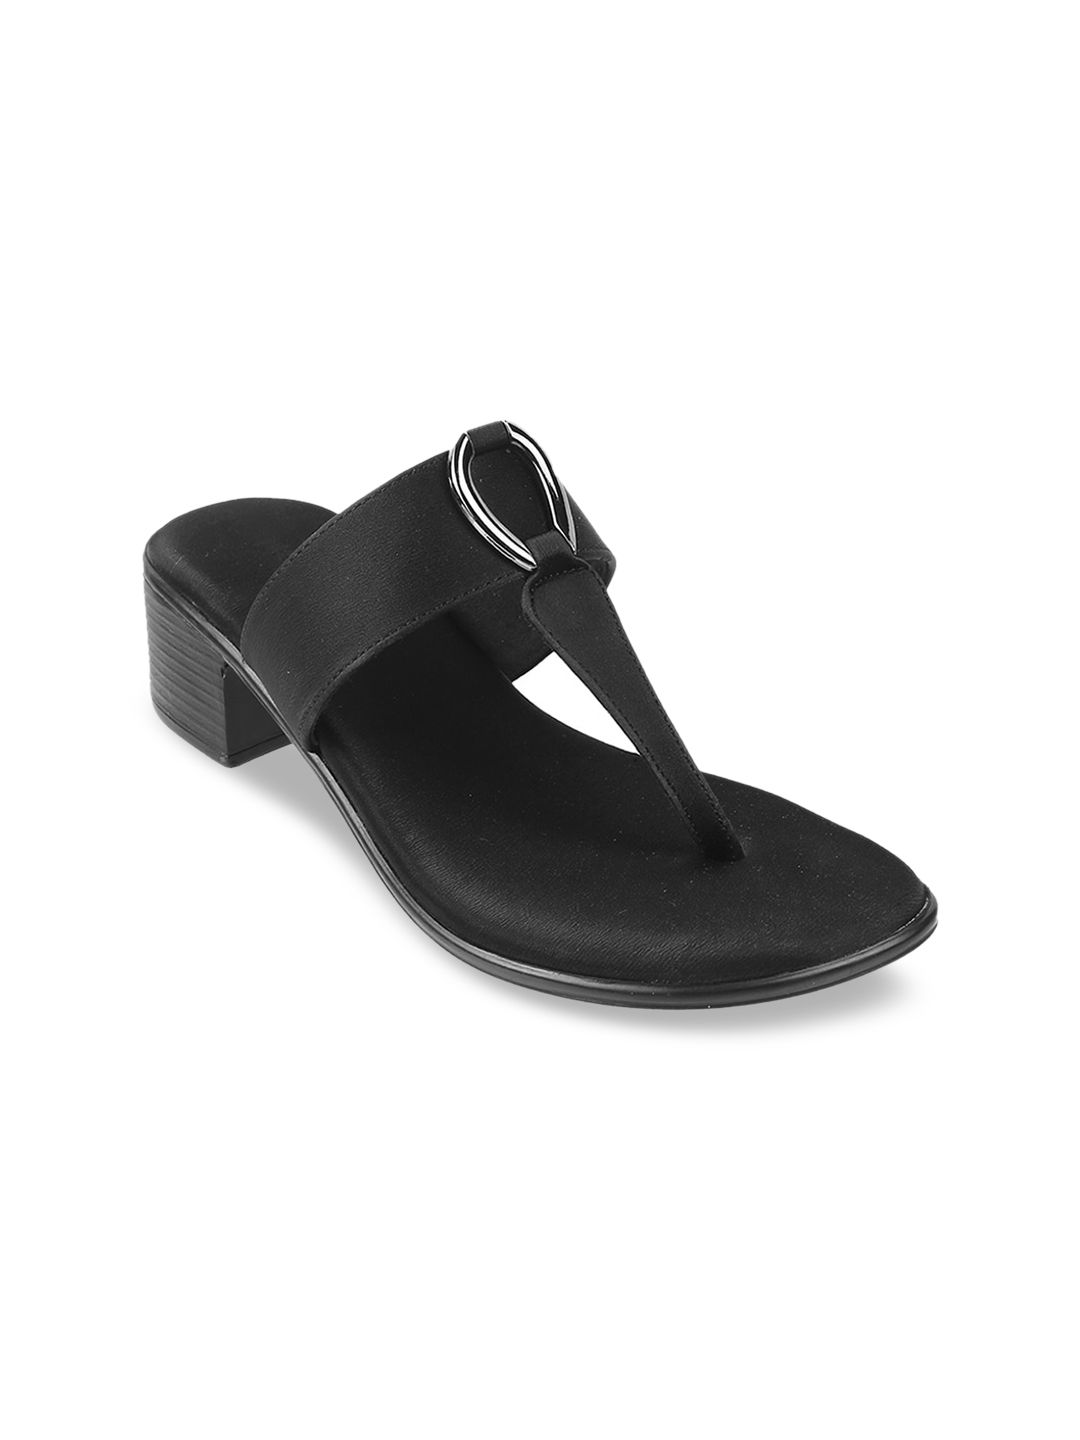 Mochi Black Solid Casual Block Heels Price in India